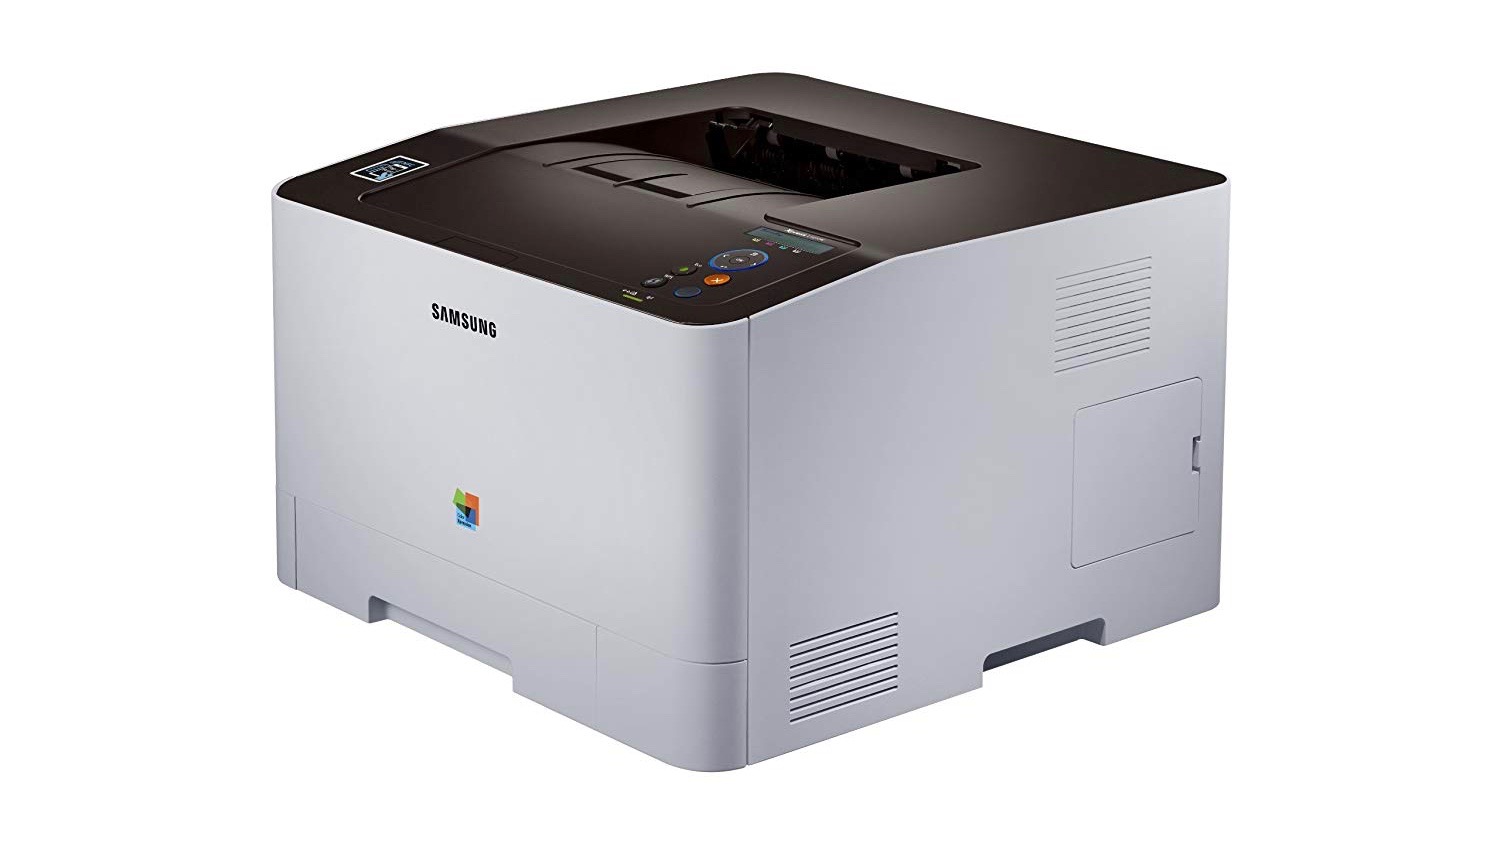 Samsung Xpress C1810W printer